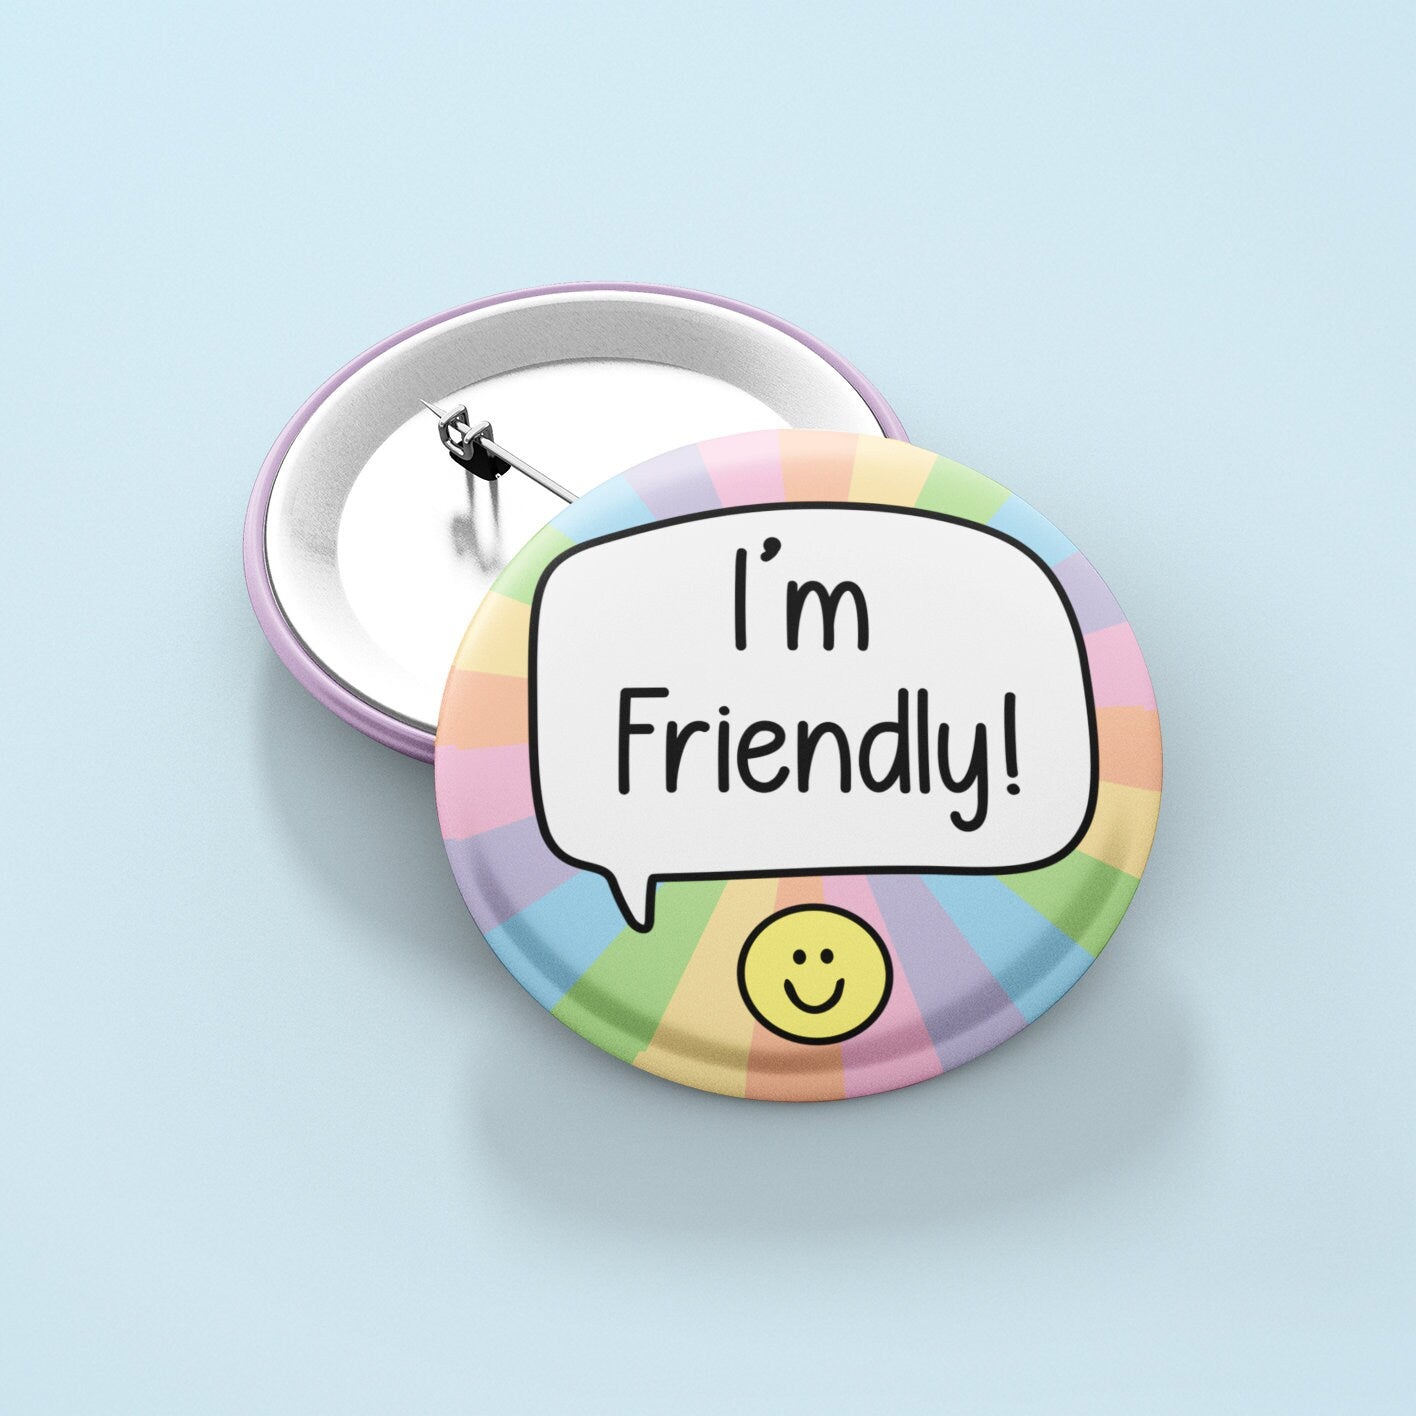 I'm Friendly! - Pin Badge / Friendship Badges